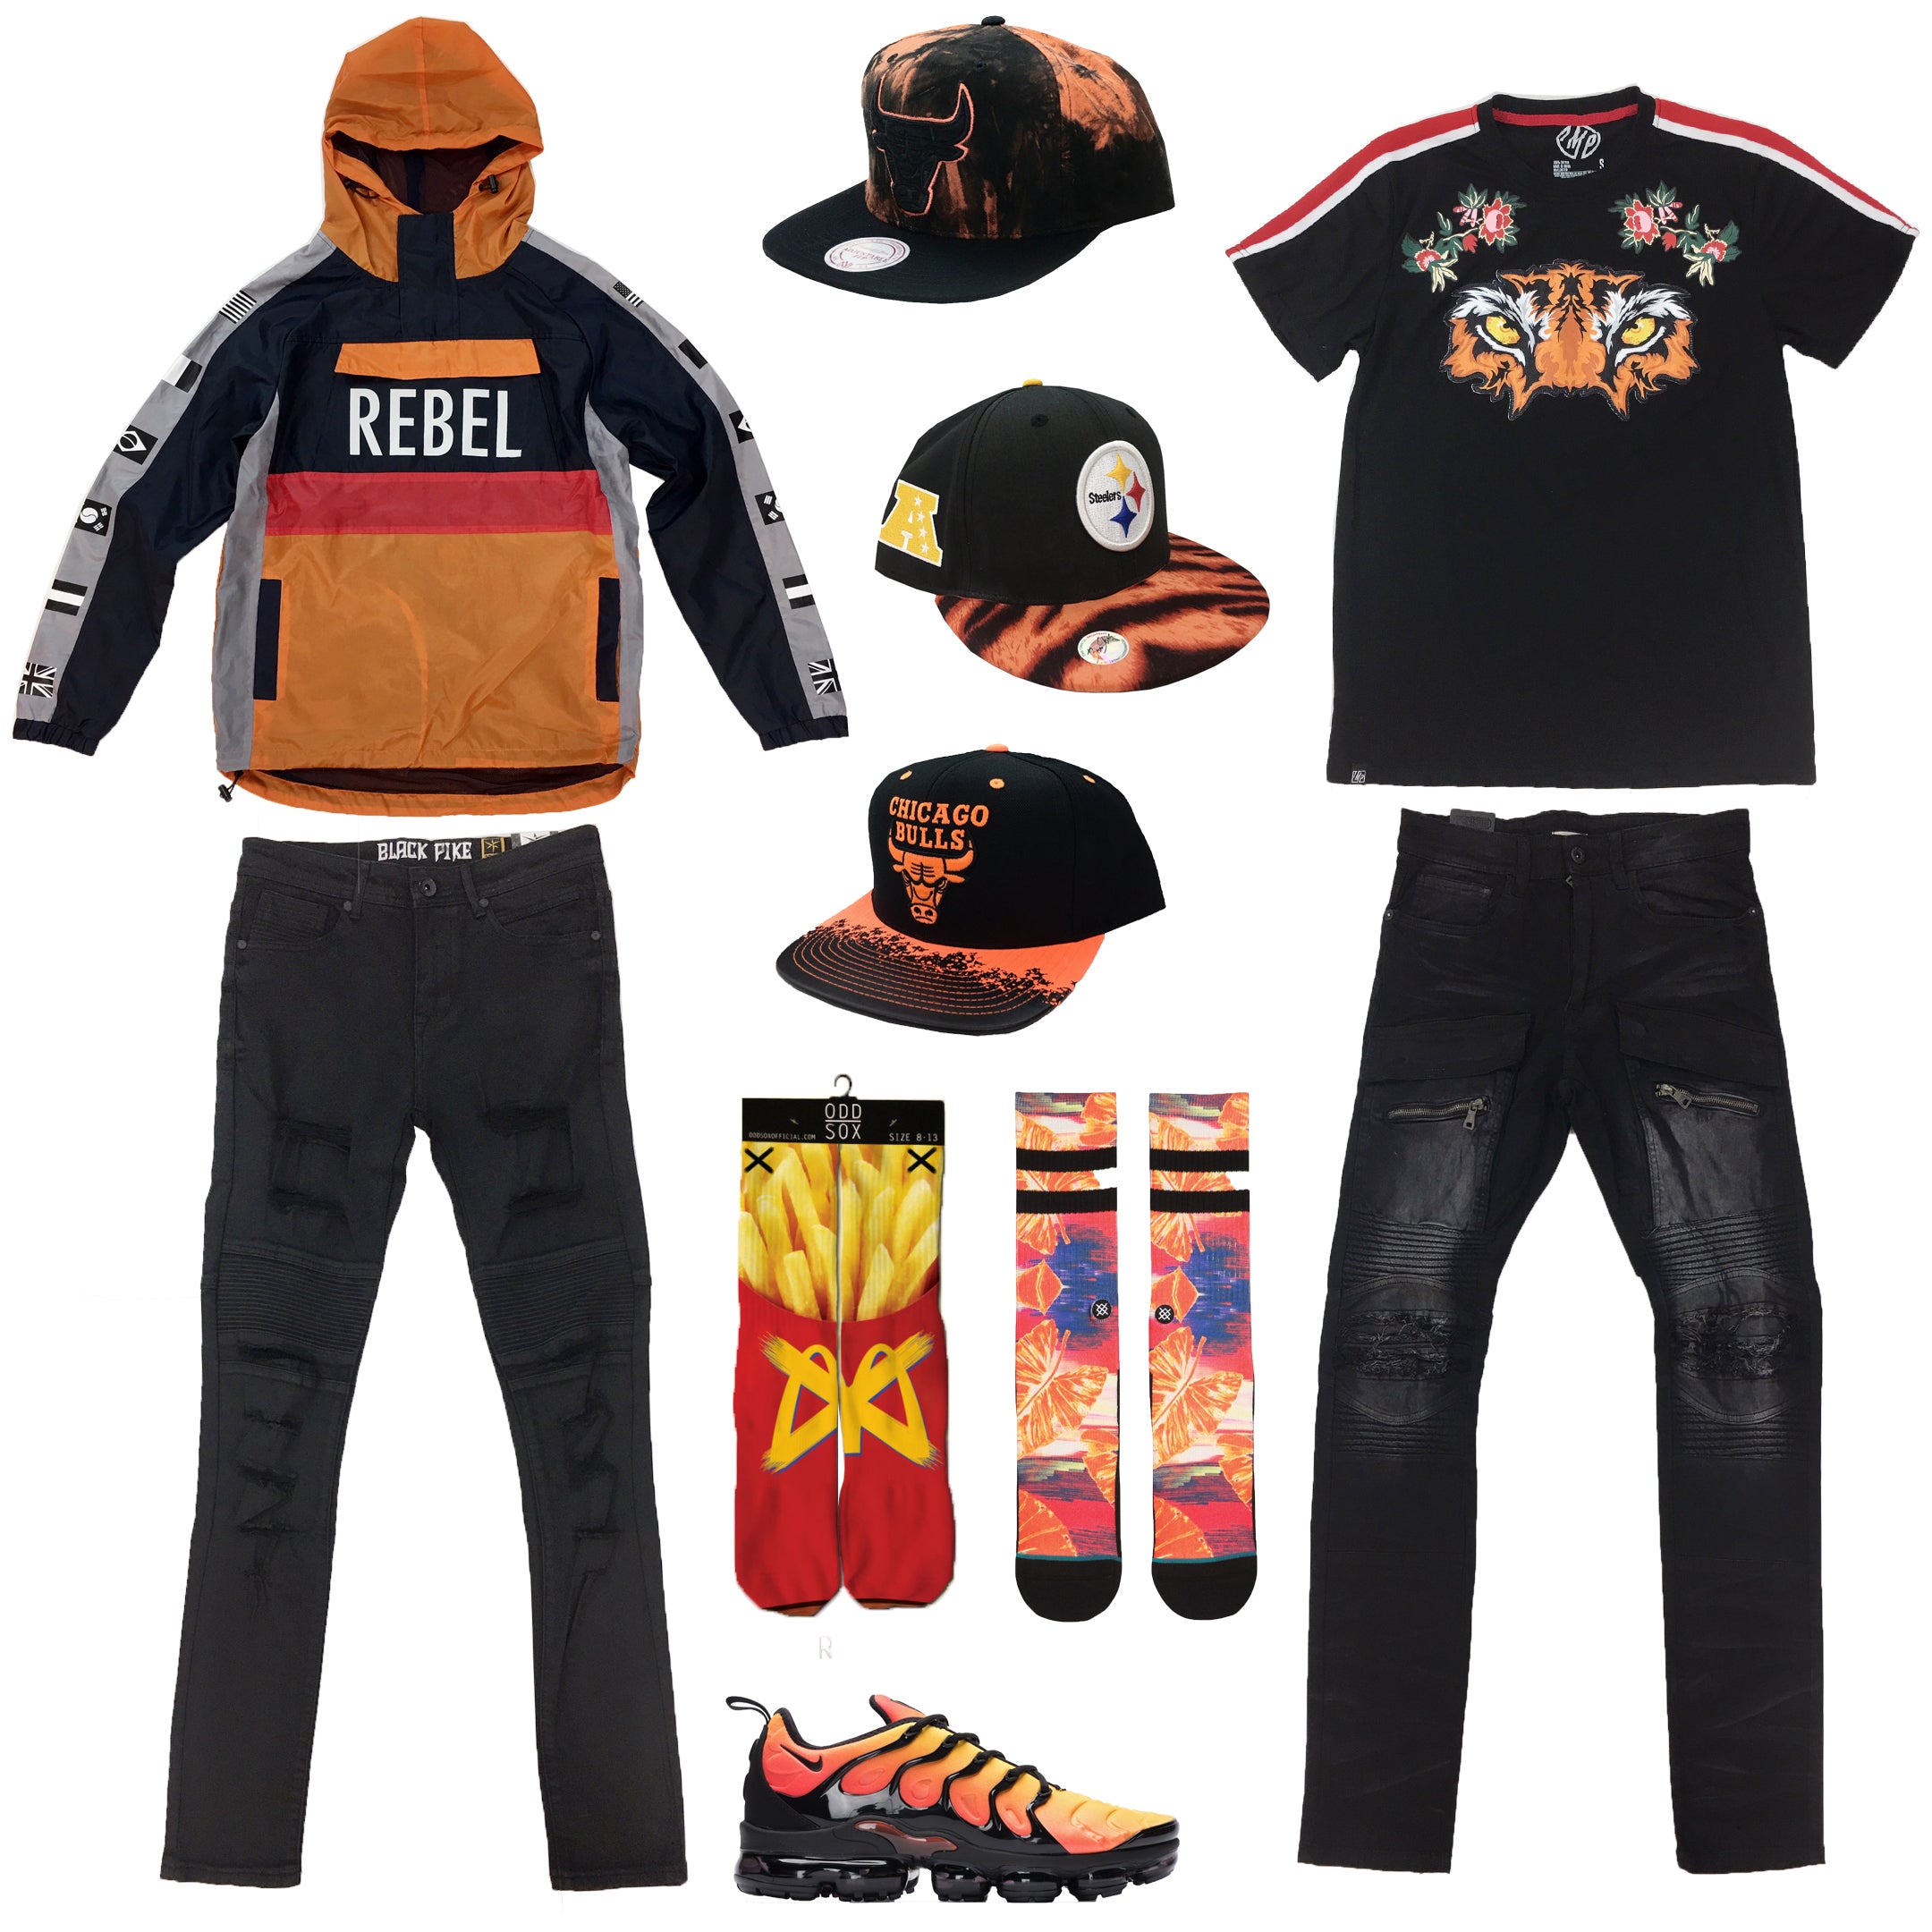 Nike Air VaporMax Plus Black/Orange Outfit